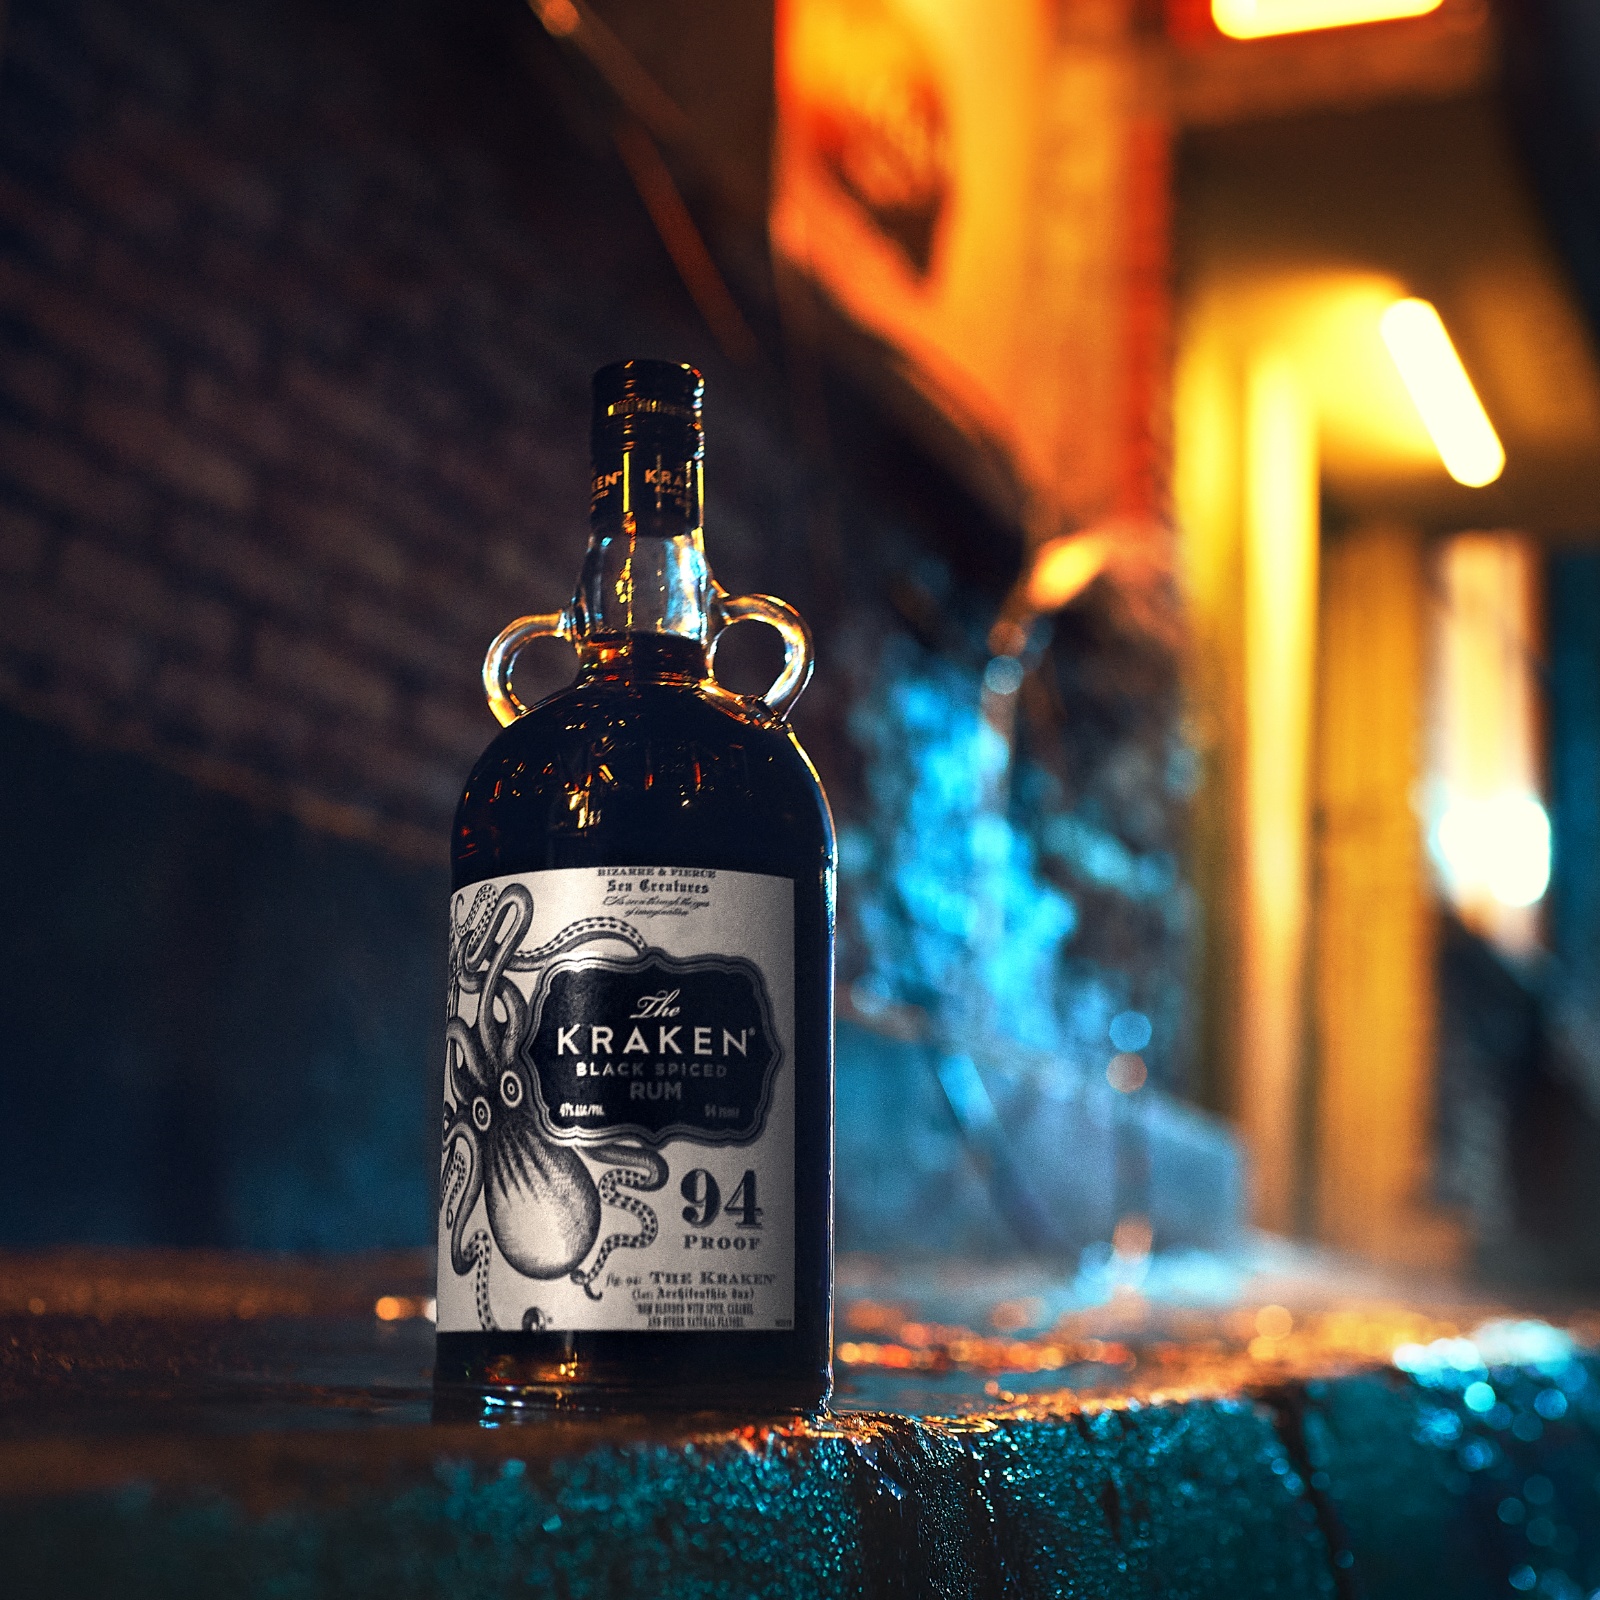 <h3>The Kraken Black Spiced Rum</h3><h4>Born of a Legend&nbsp;</h4>